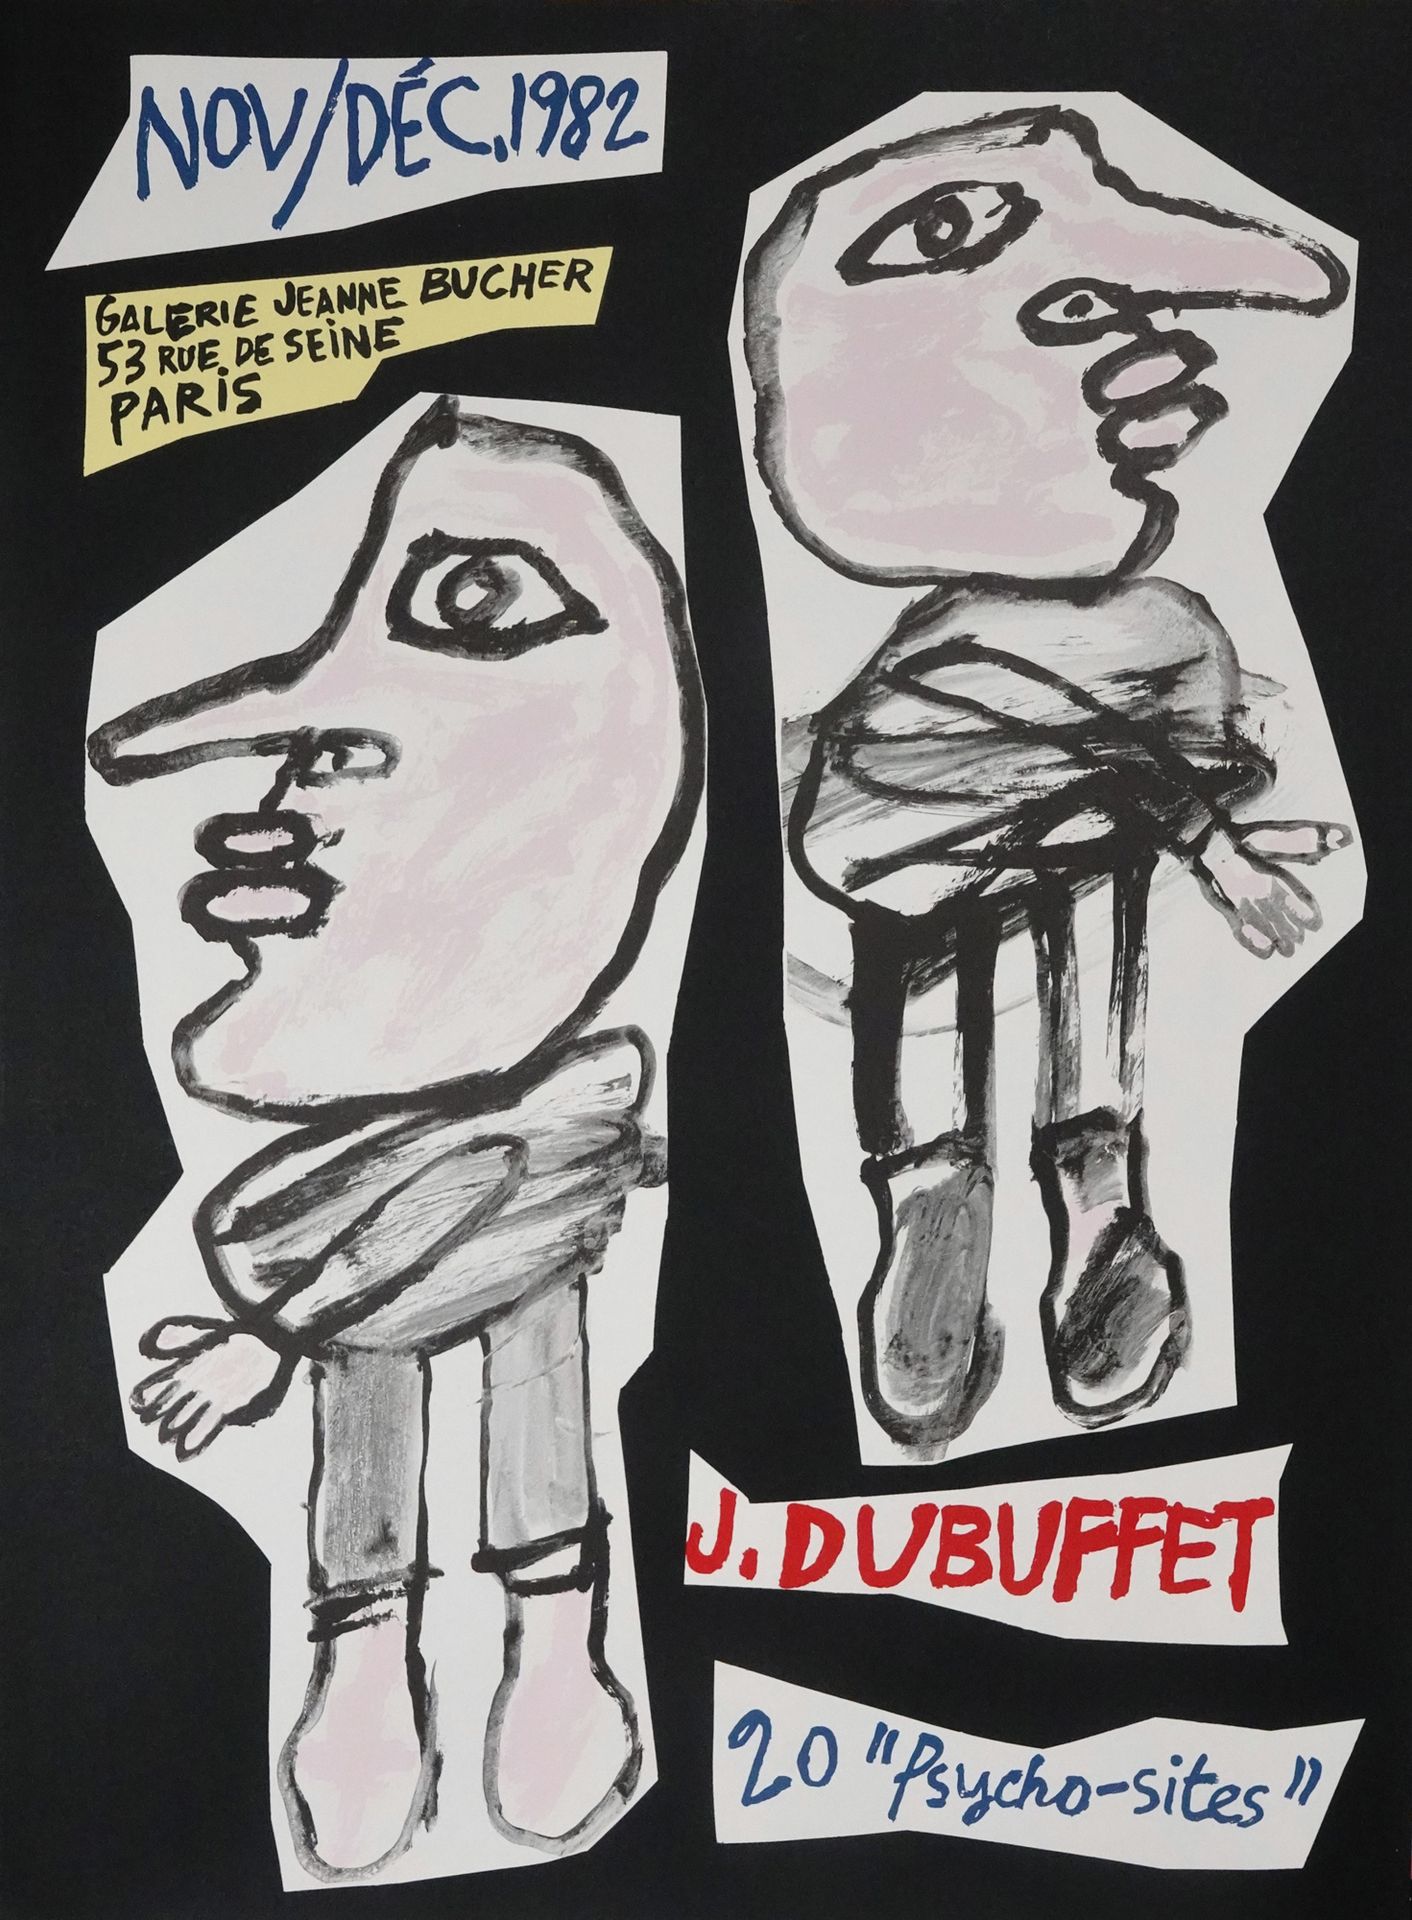 Jean DUBUFFET (1901-1985), d'après 20 Psycho-sites, 1982
Plakat für eine Ausstel&hellip;